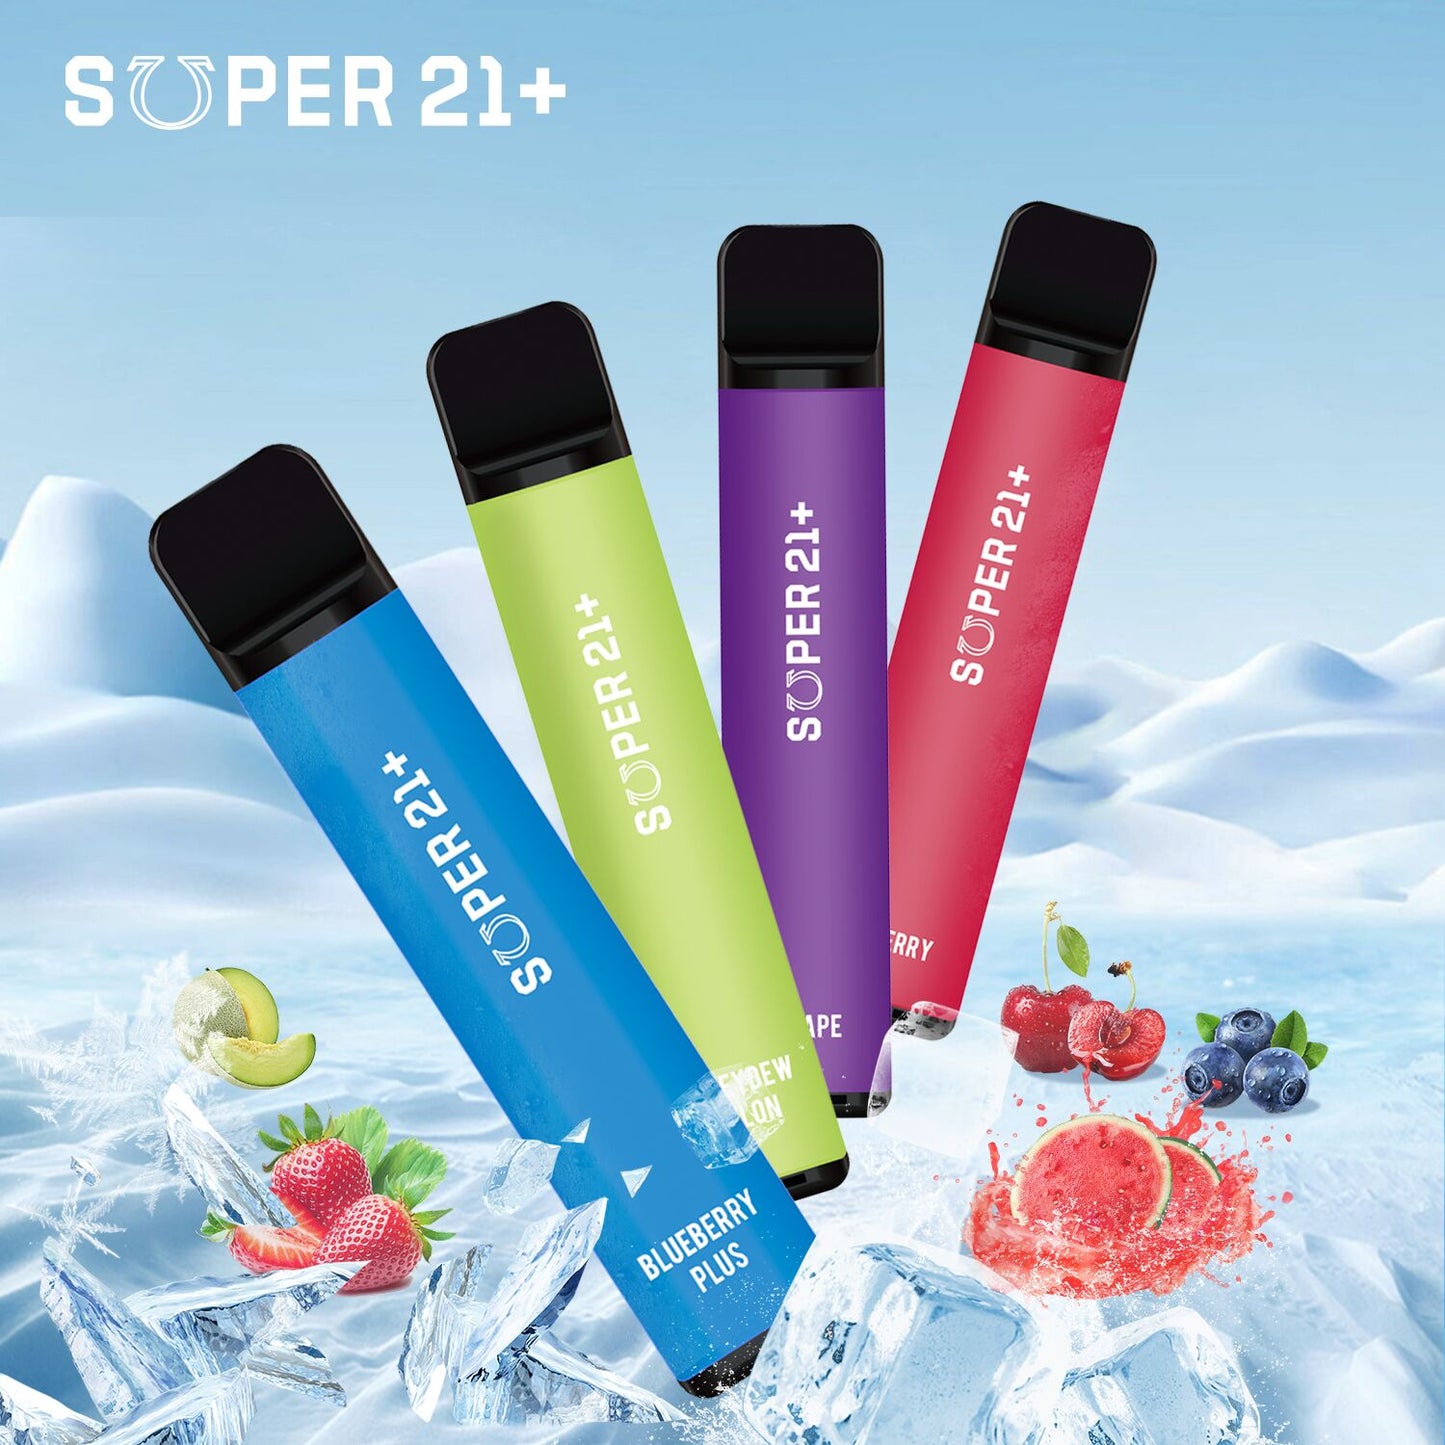 Super 21+ 1500 Strawberry Ice (2%)